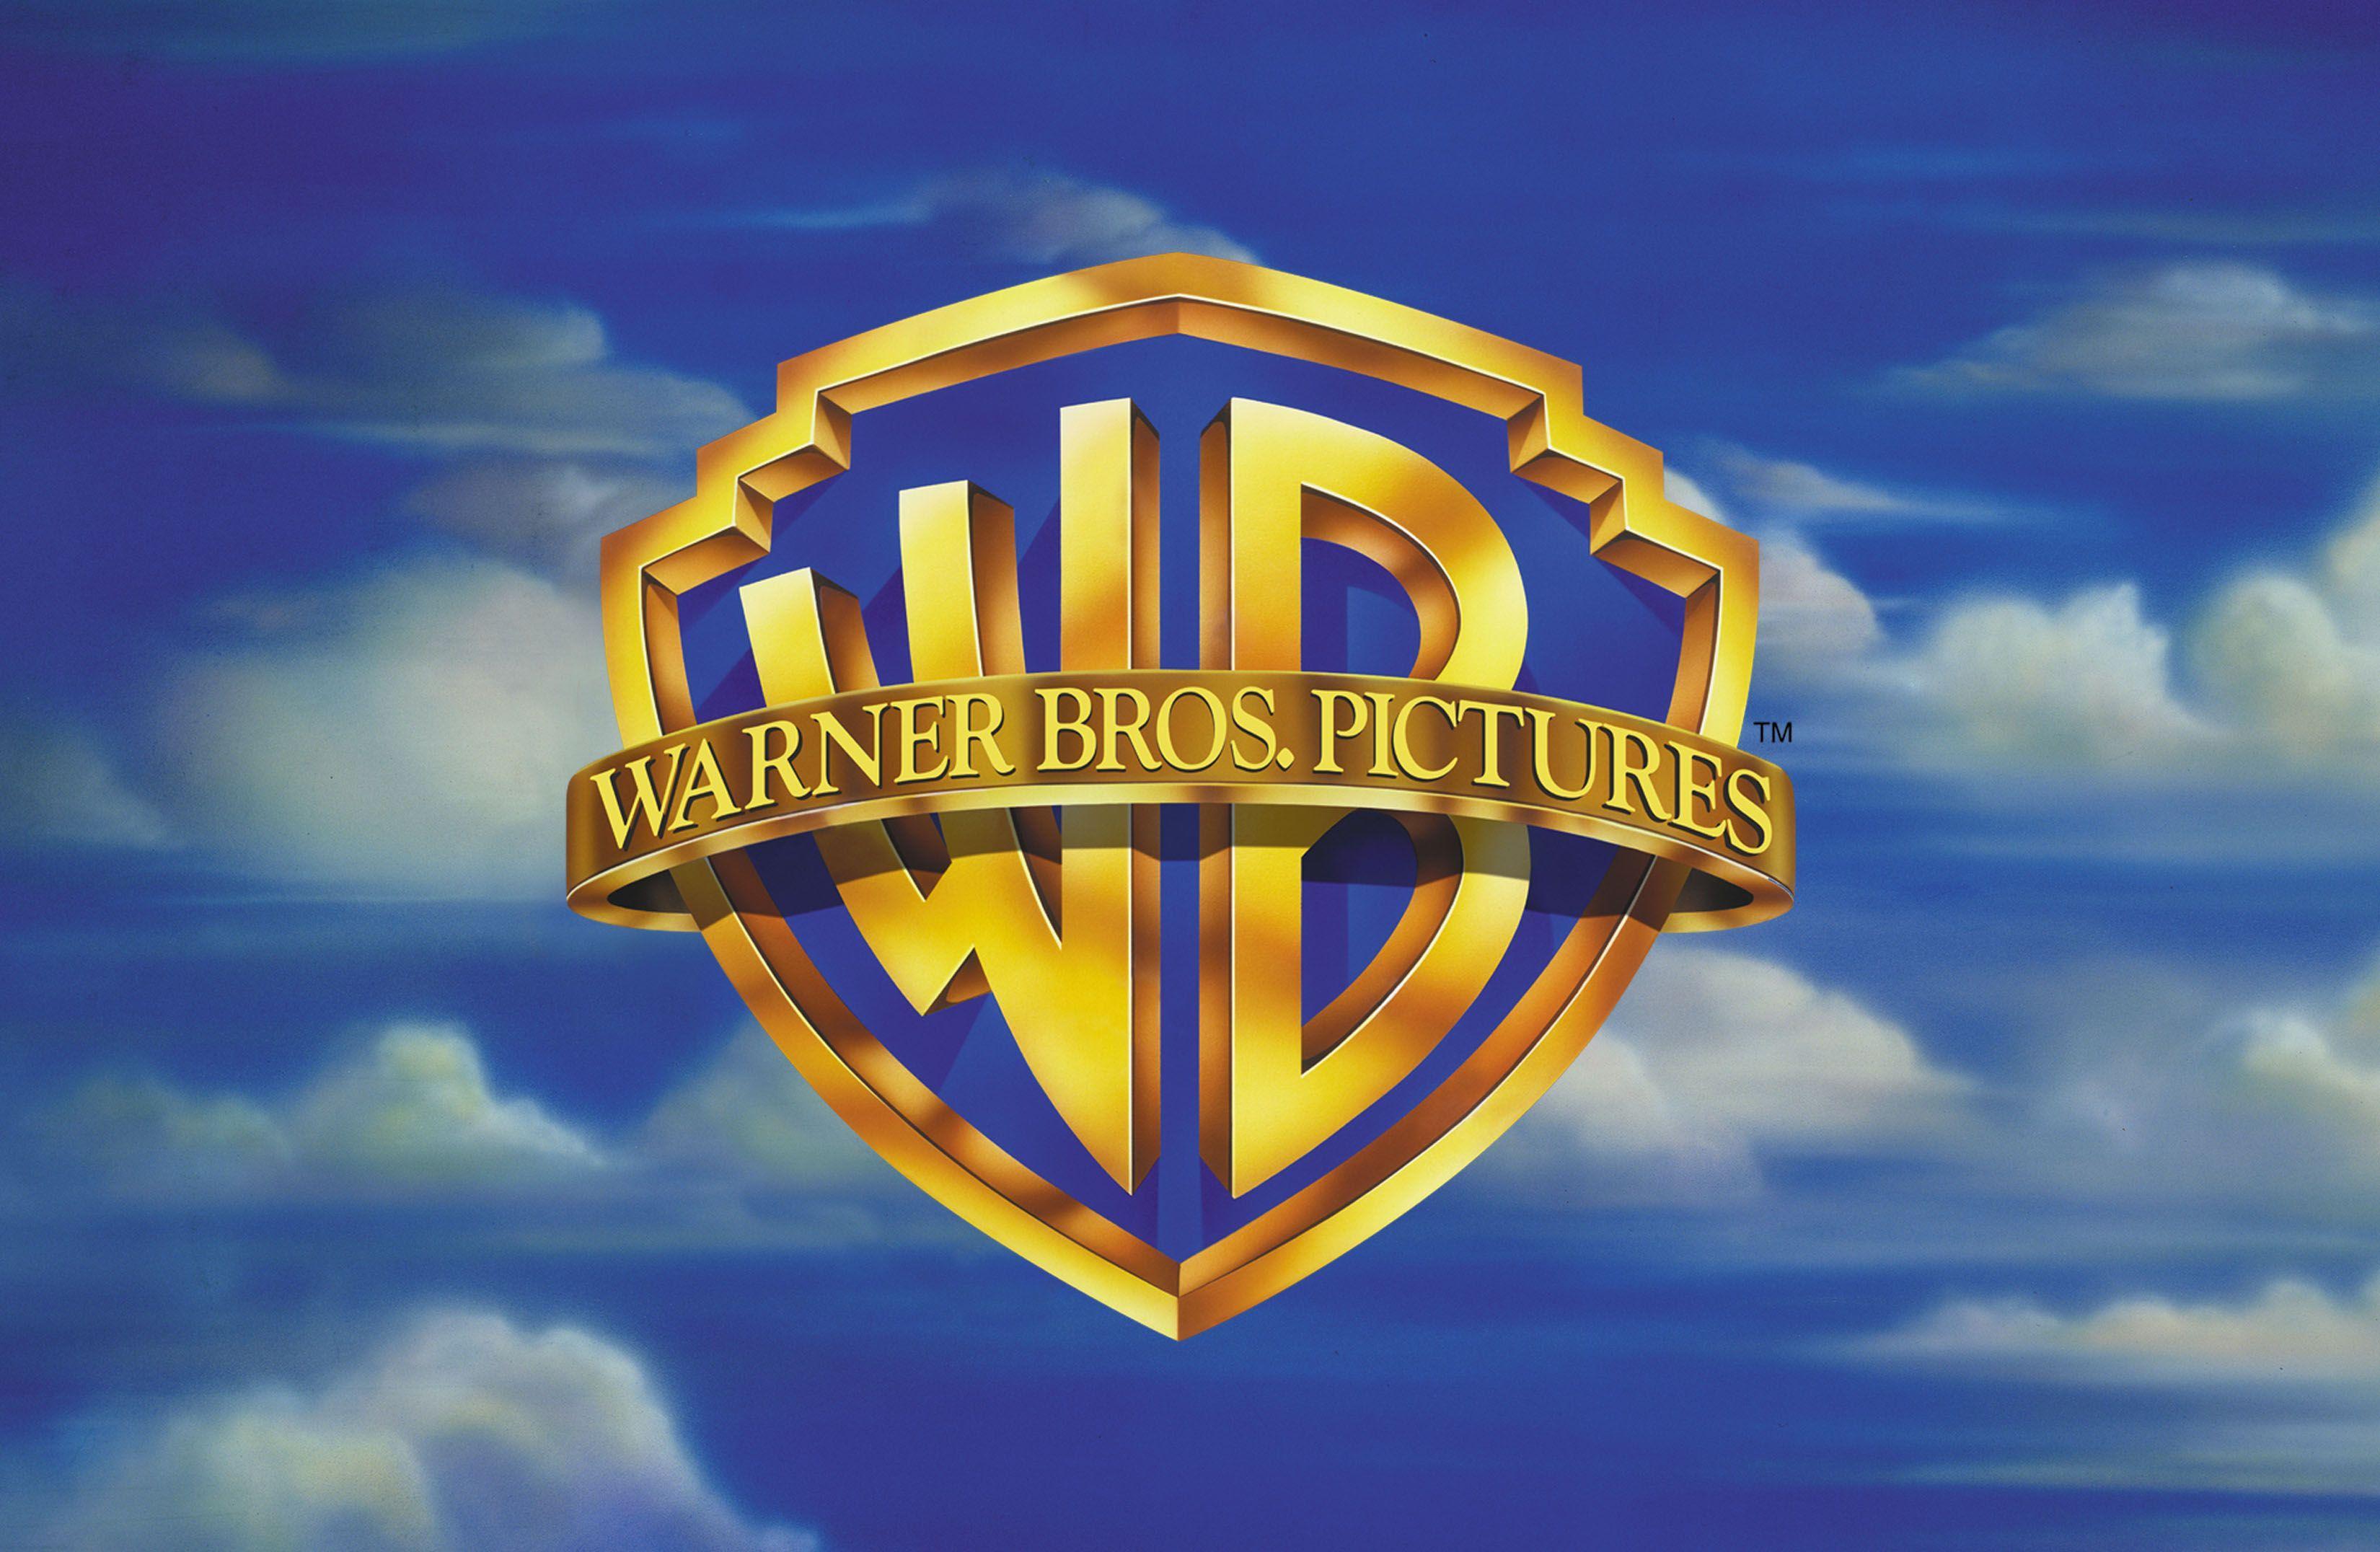 681x580px Warner Bros 373.86 KB